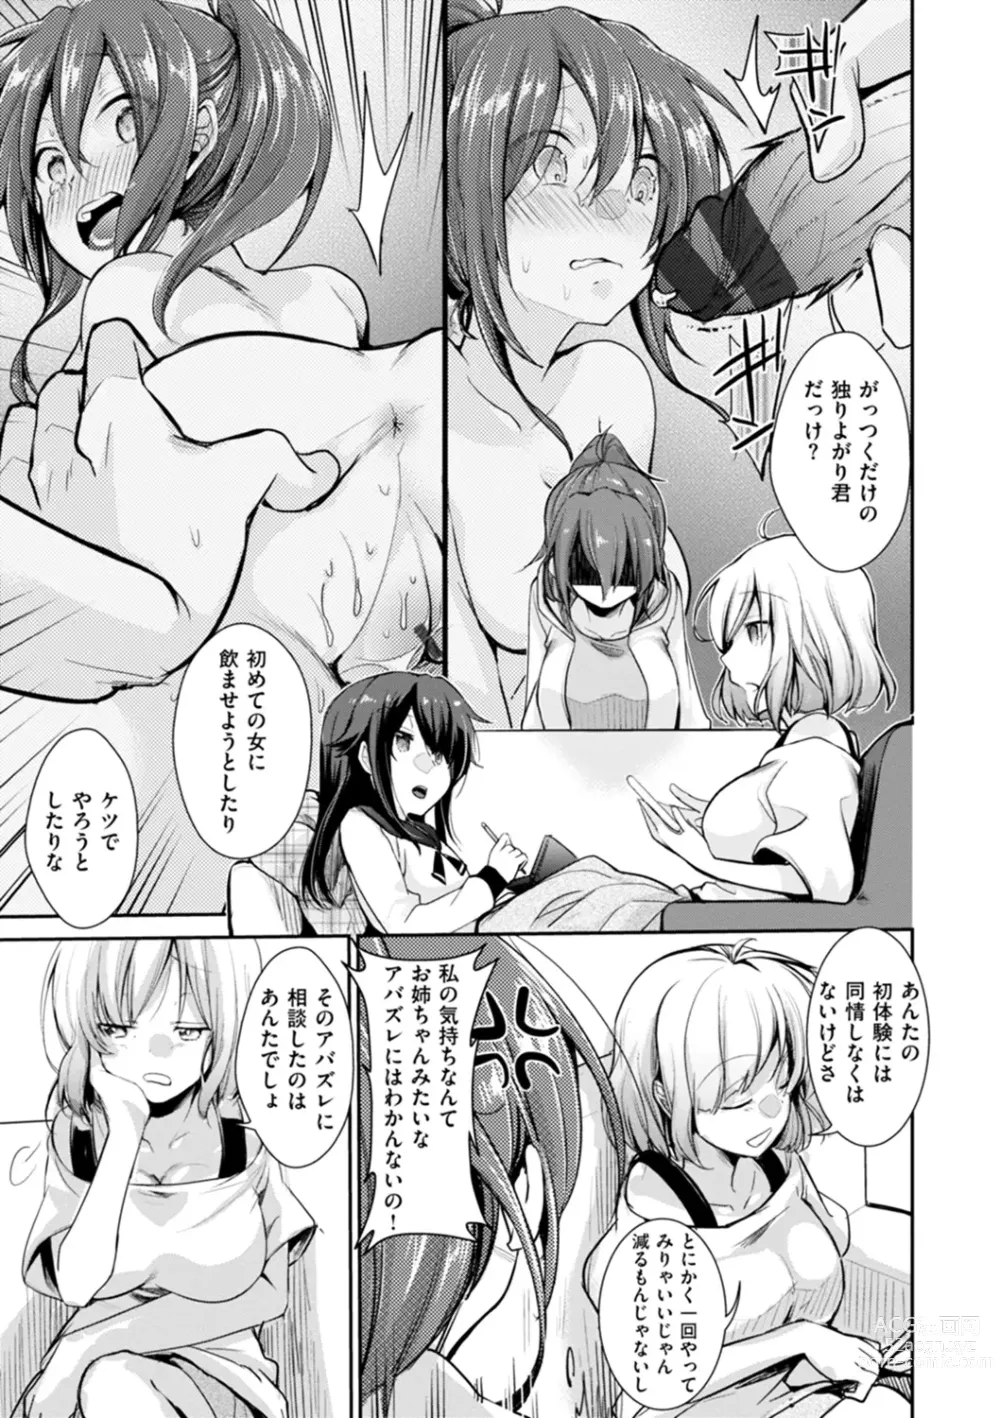 Page 5 of manga Kanojo no Jijou - Her Circumstances